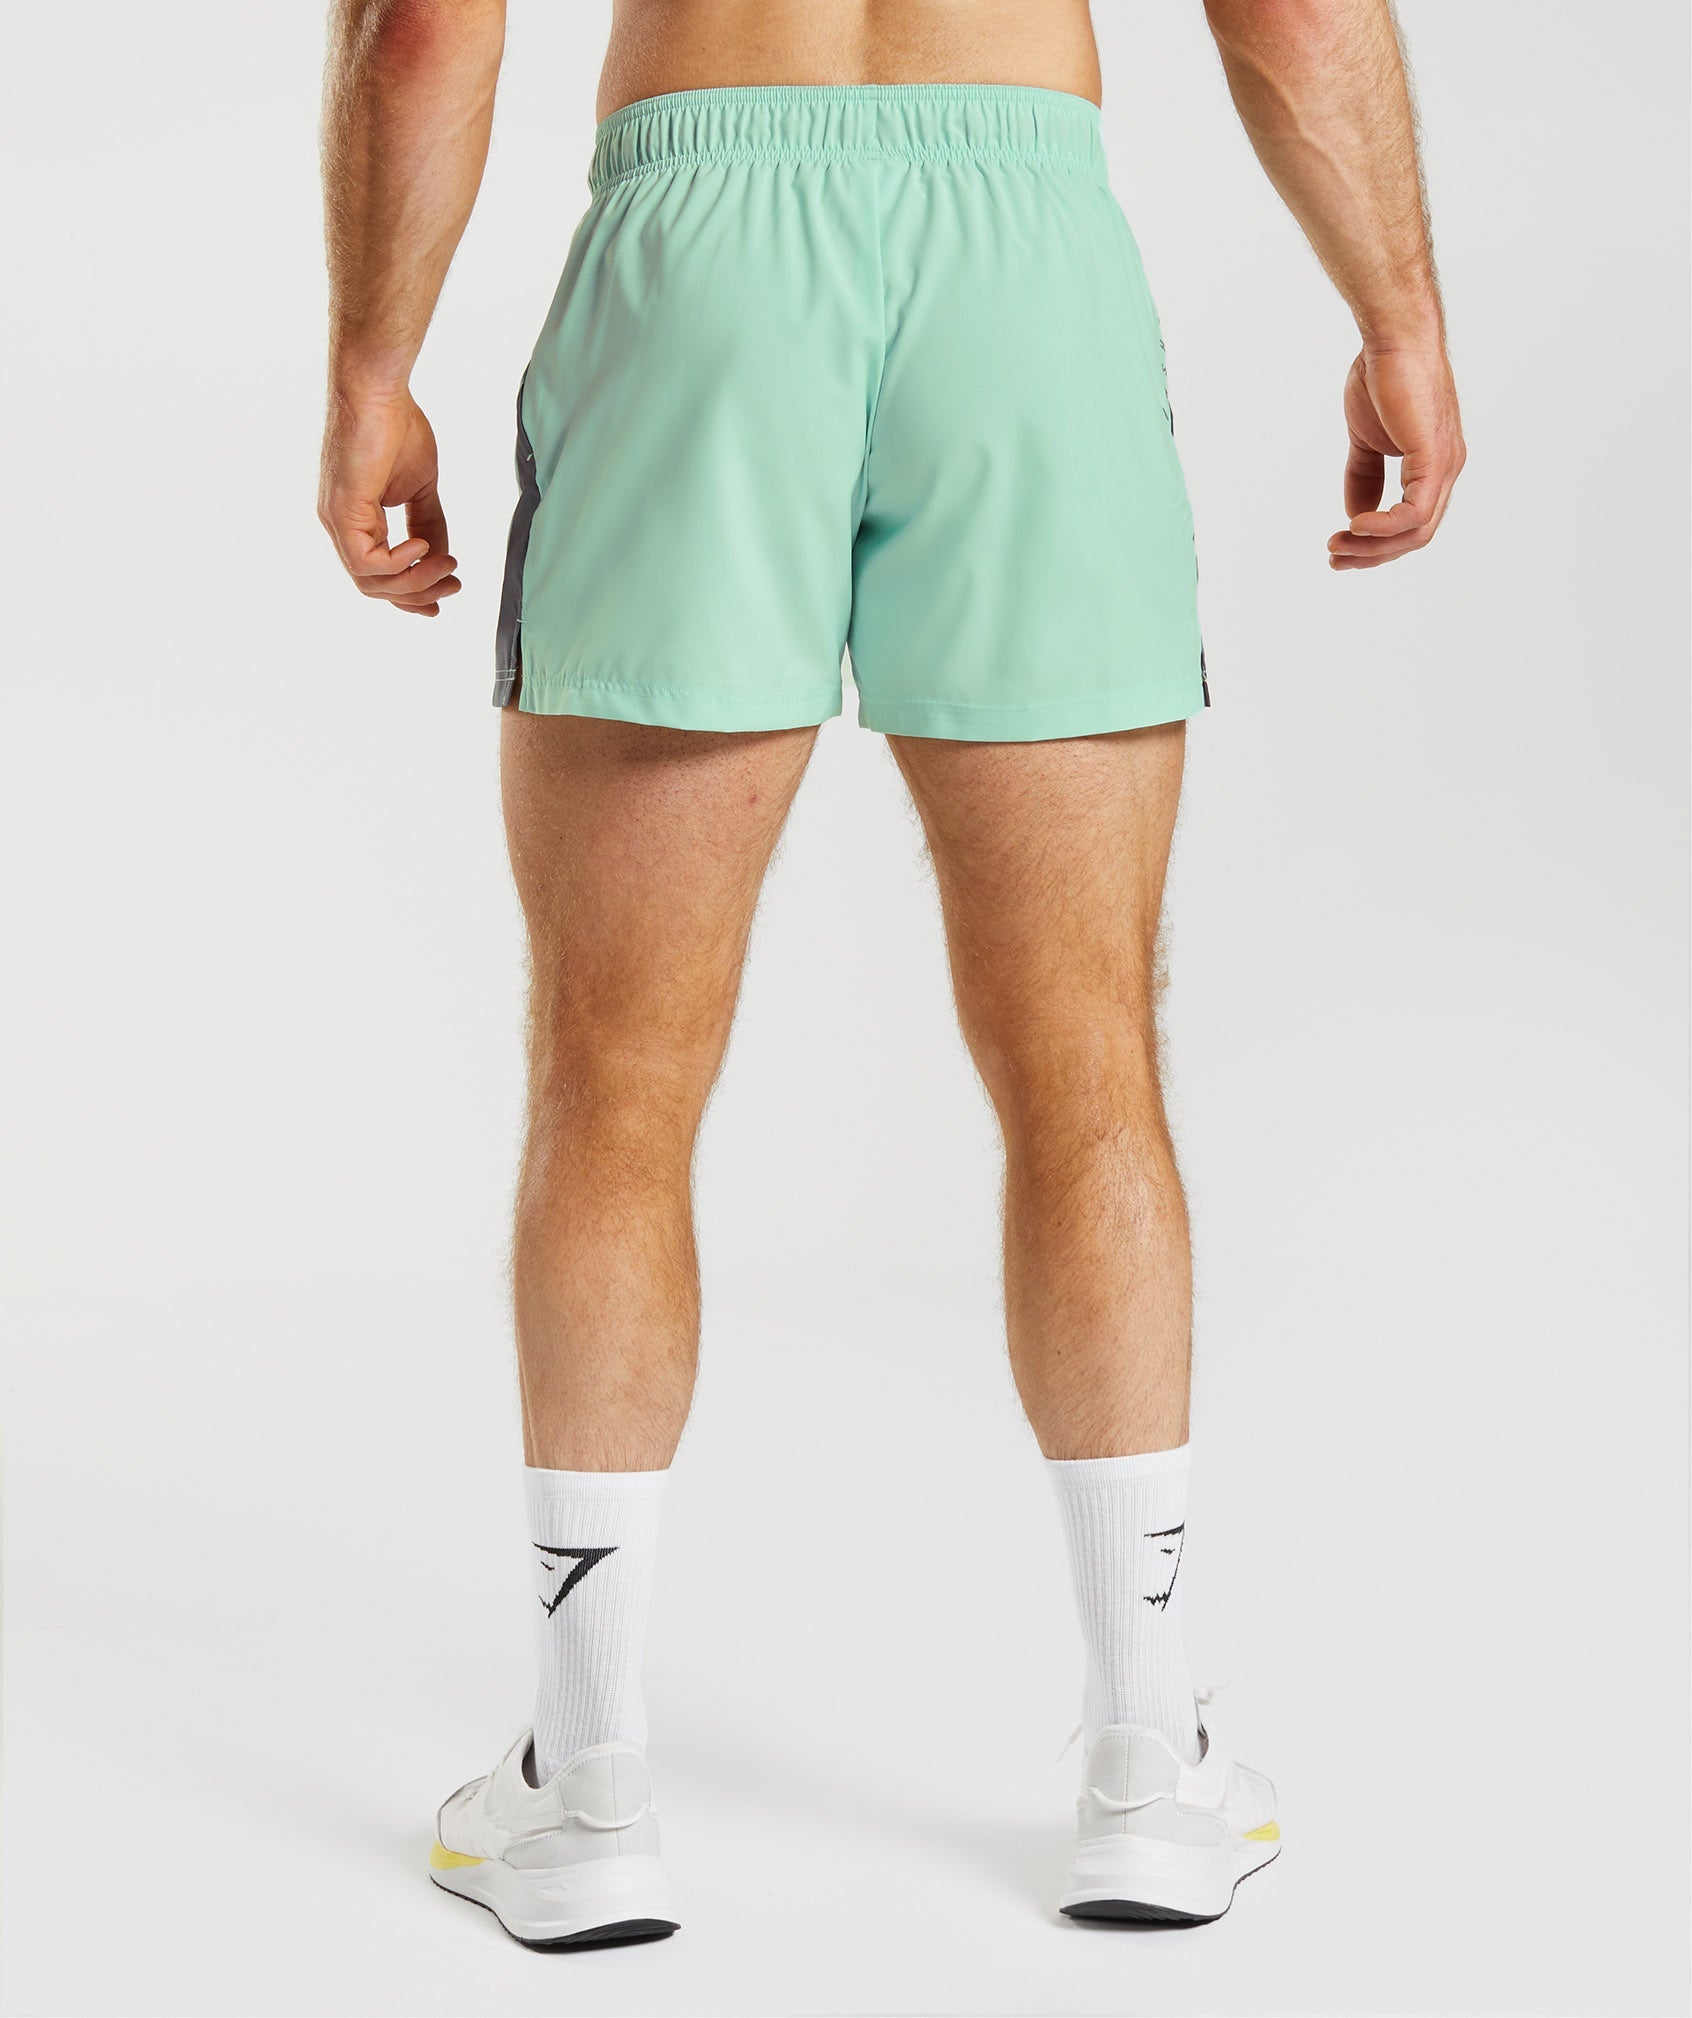 Sport 5" Shorts in Pastel Green/Silhouette Grey